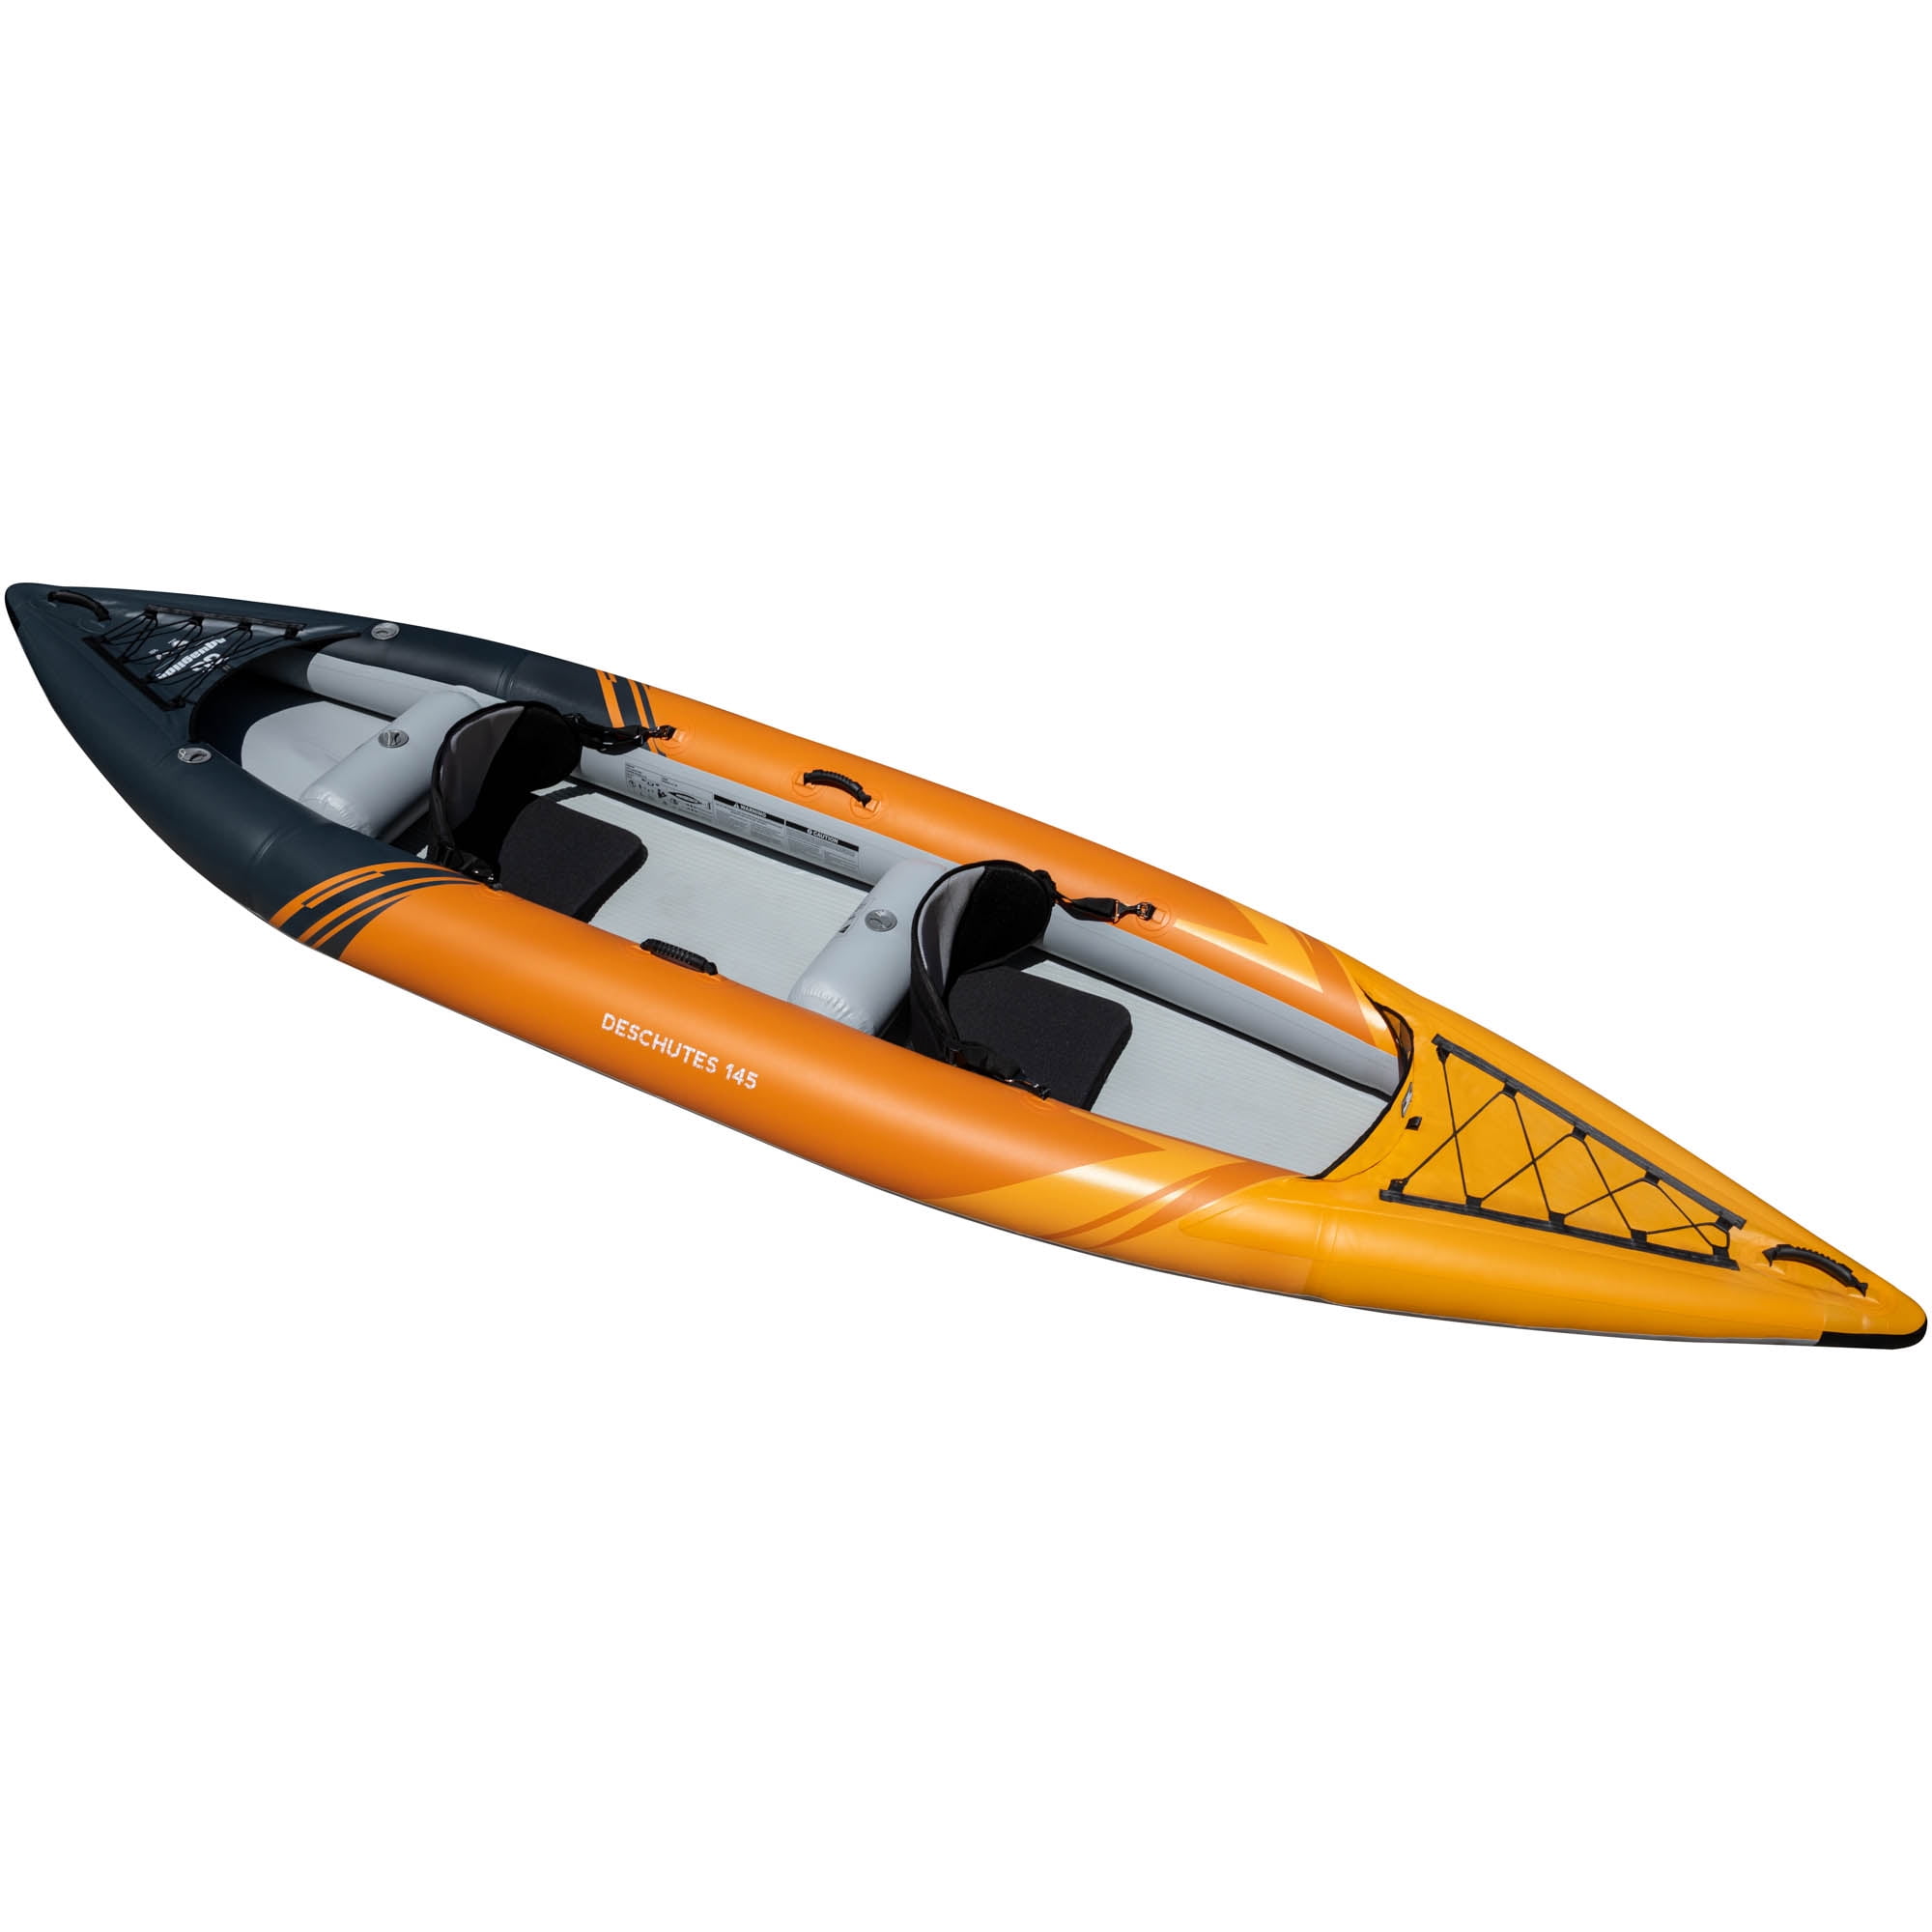 UV Resistant & Durable Universal Kayak SUP Air Vent Valve Mesh Drain Plug Scupper Bungs Stopper Accessories